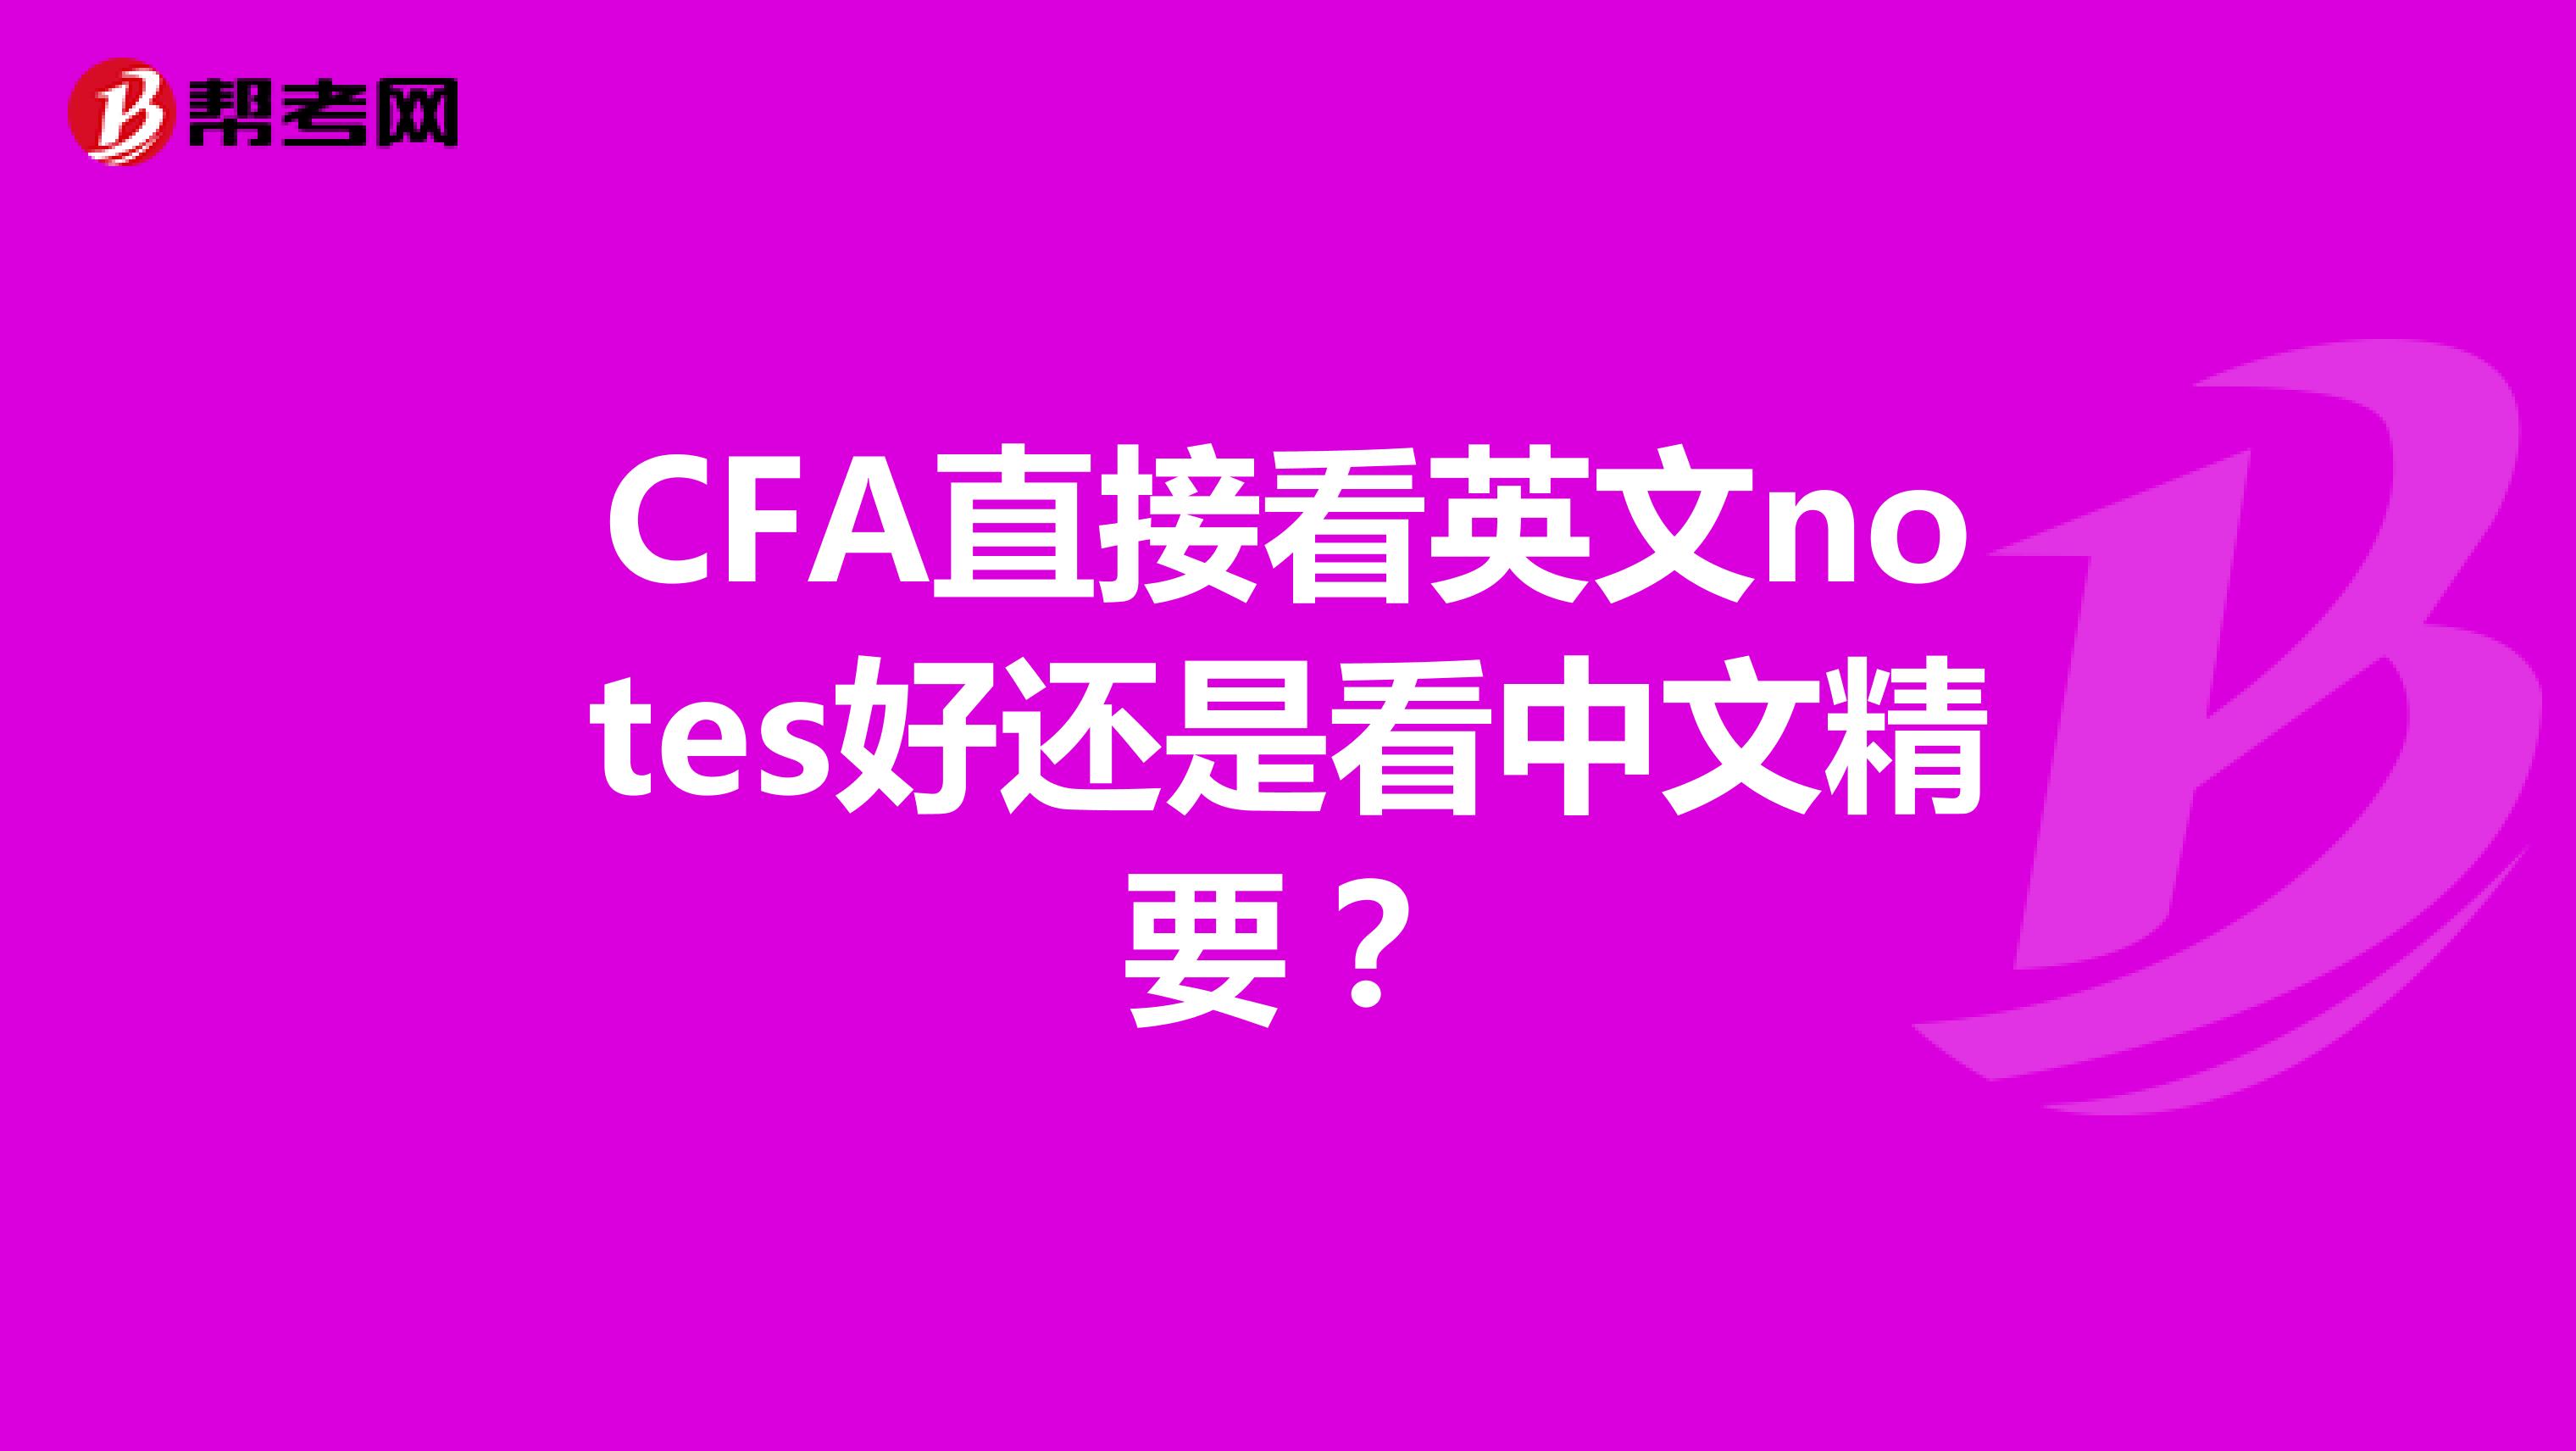 CFA直接看英文notes好还是看中文精要？